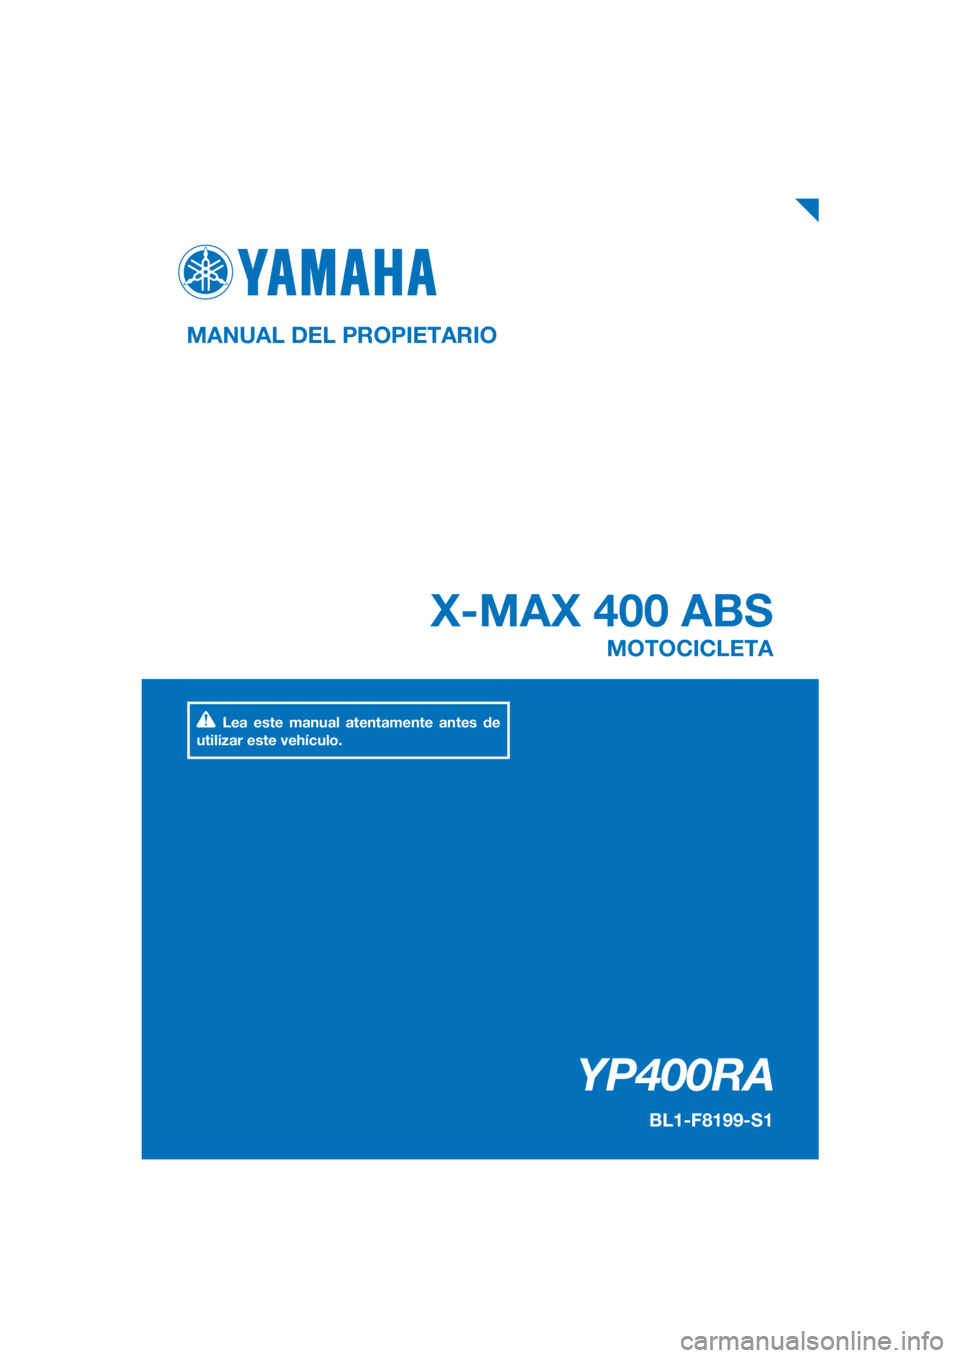 YAMAHA XMAX 400 2020  Manuale de Empleo (in Spanish) 